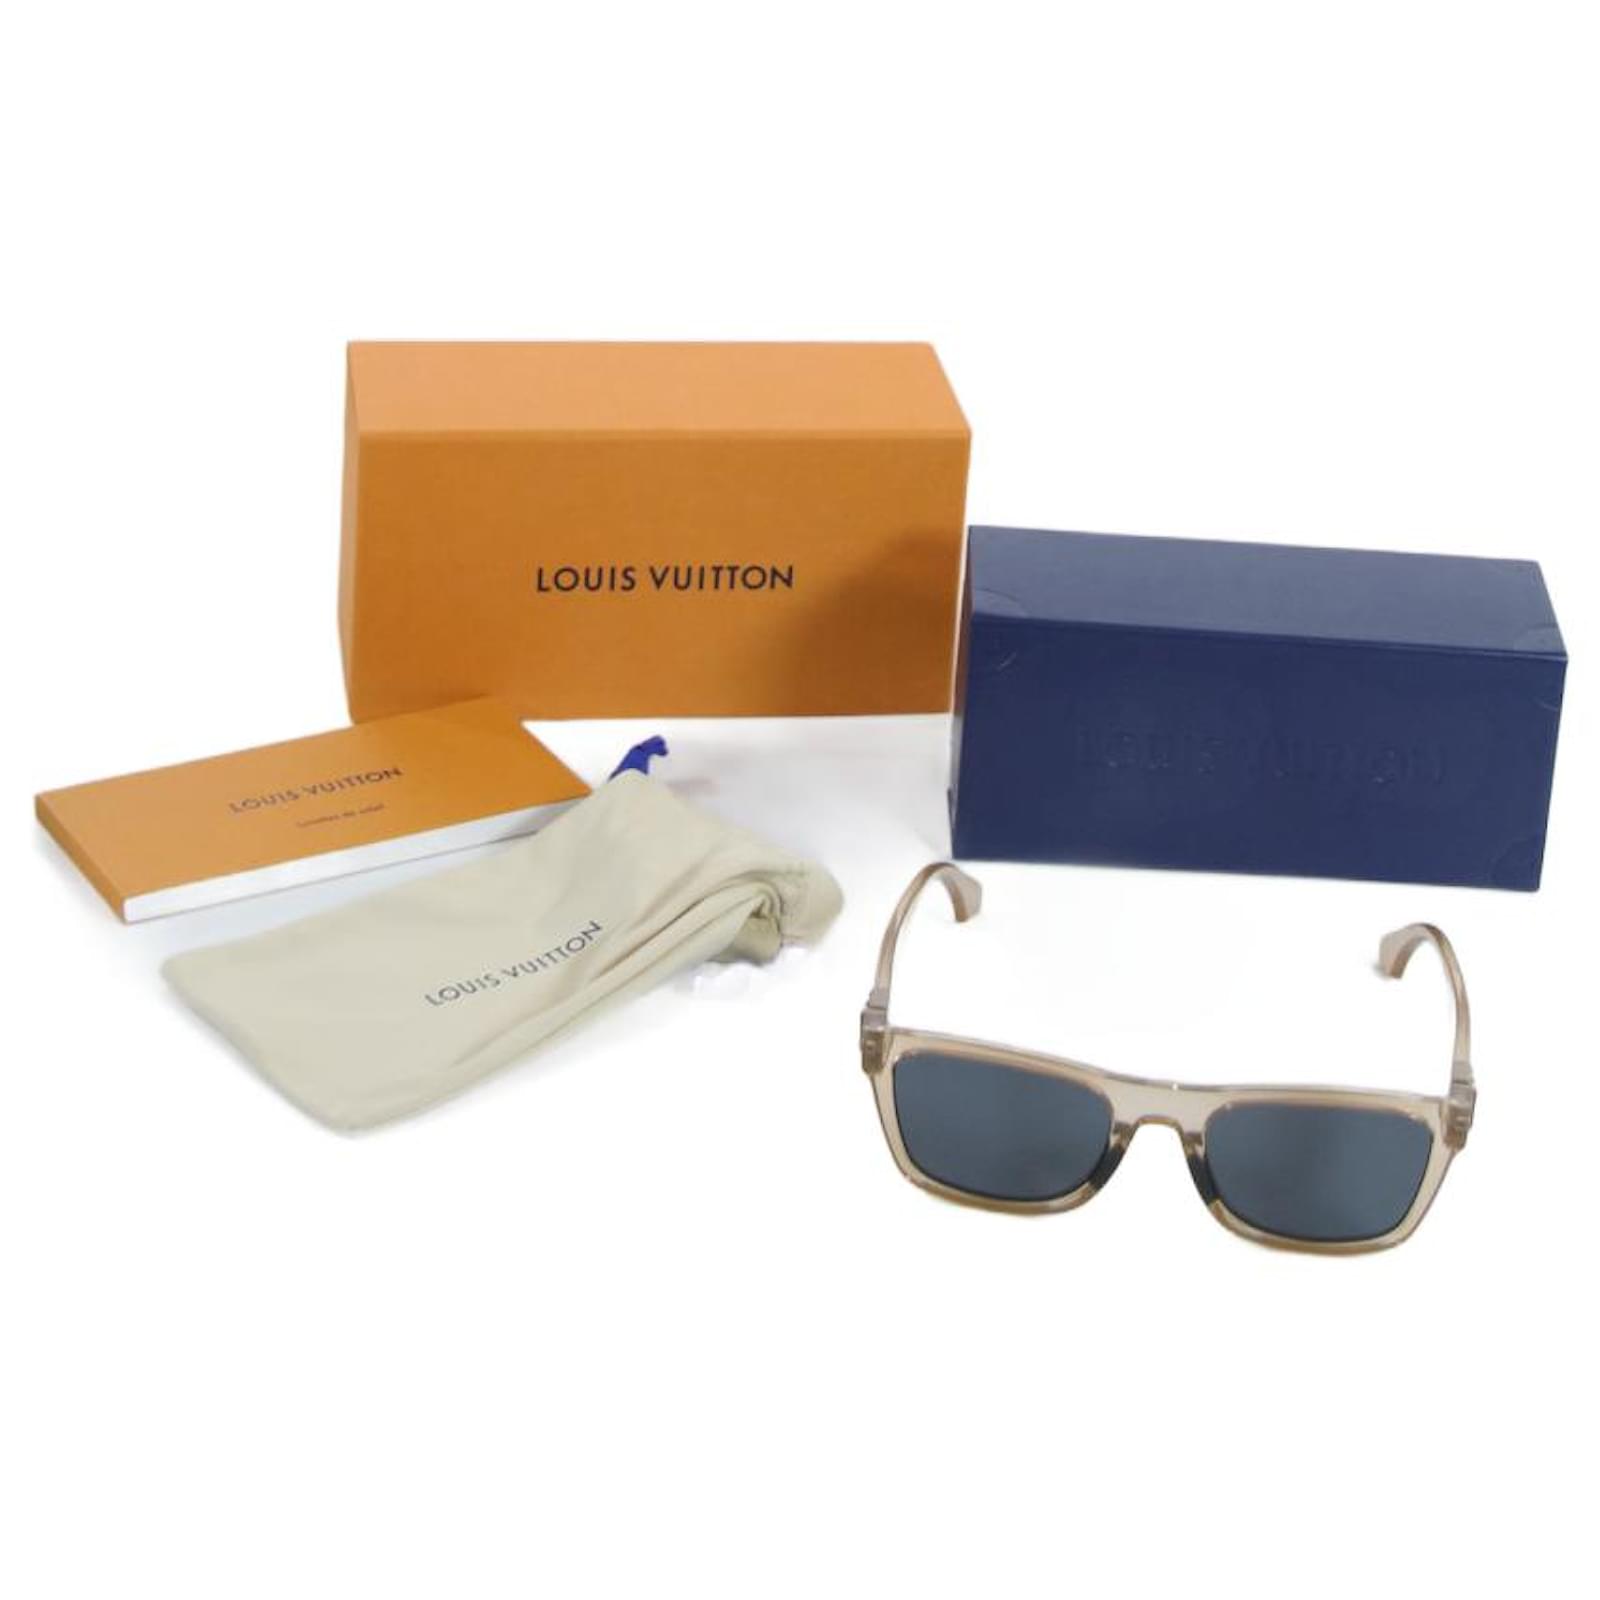 original louis vuitton sunglasses box